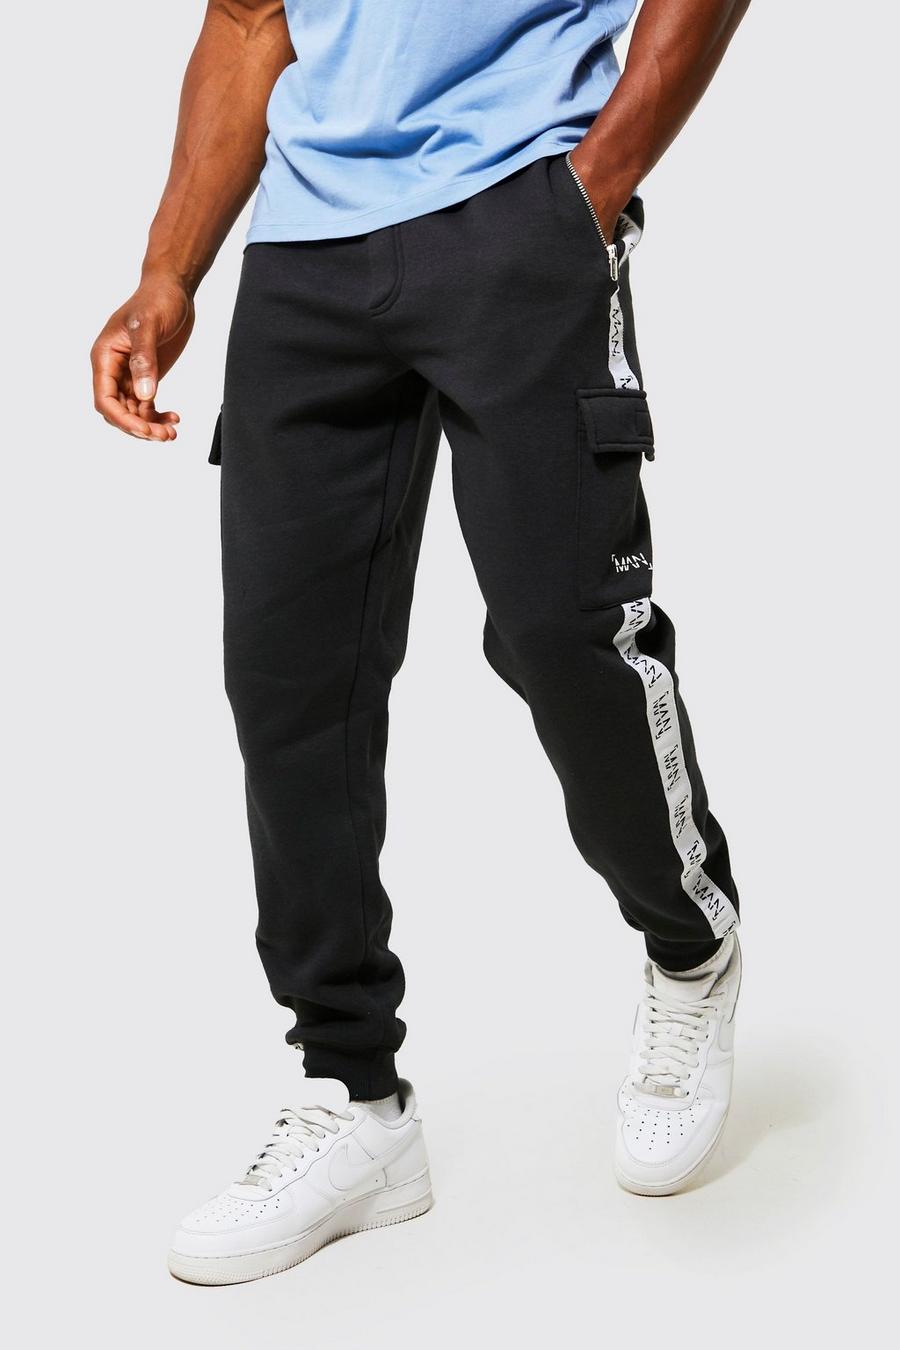 Pantalón deportivo cargo ajustado con cinta, Black nero